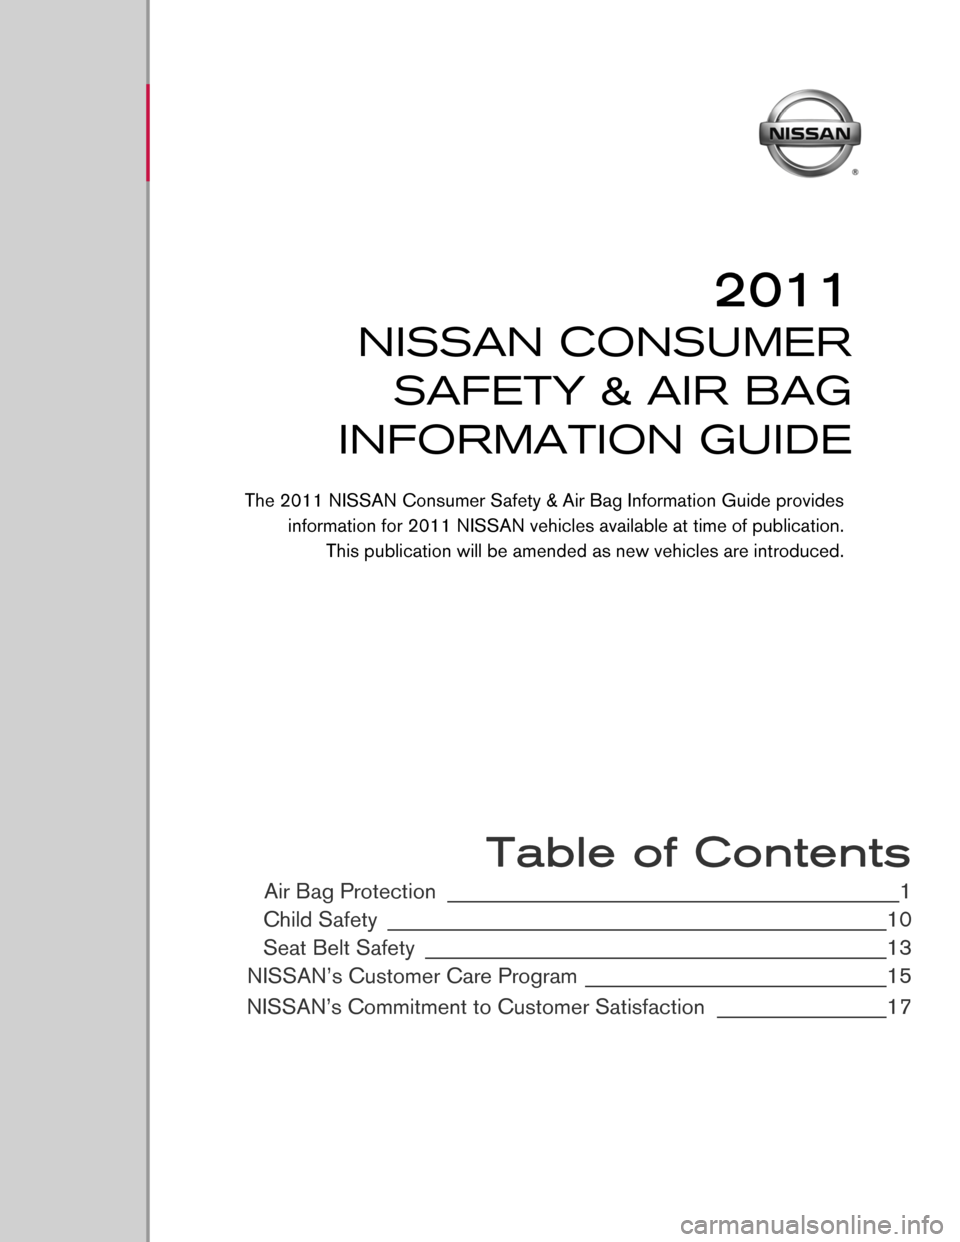 NISSAN VERSA HATCHBACK 2011 1.G Consumer Safety Air Bag Information Guide 